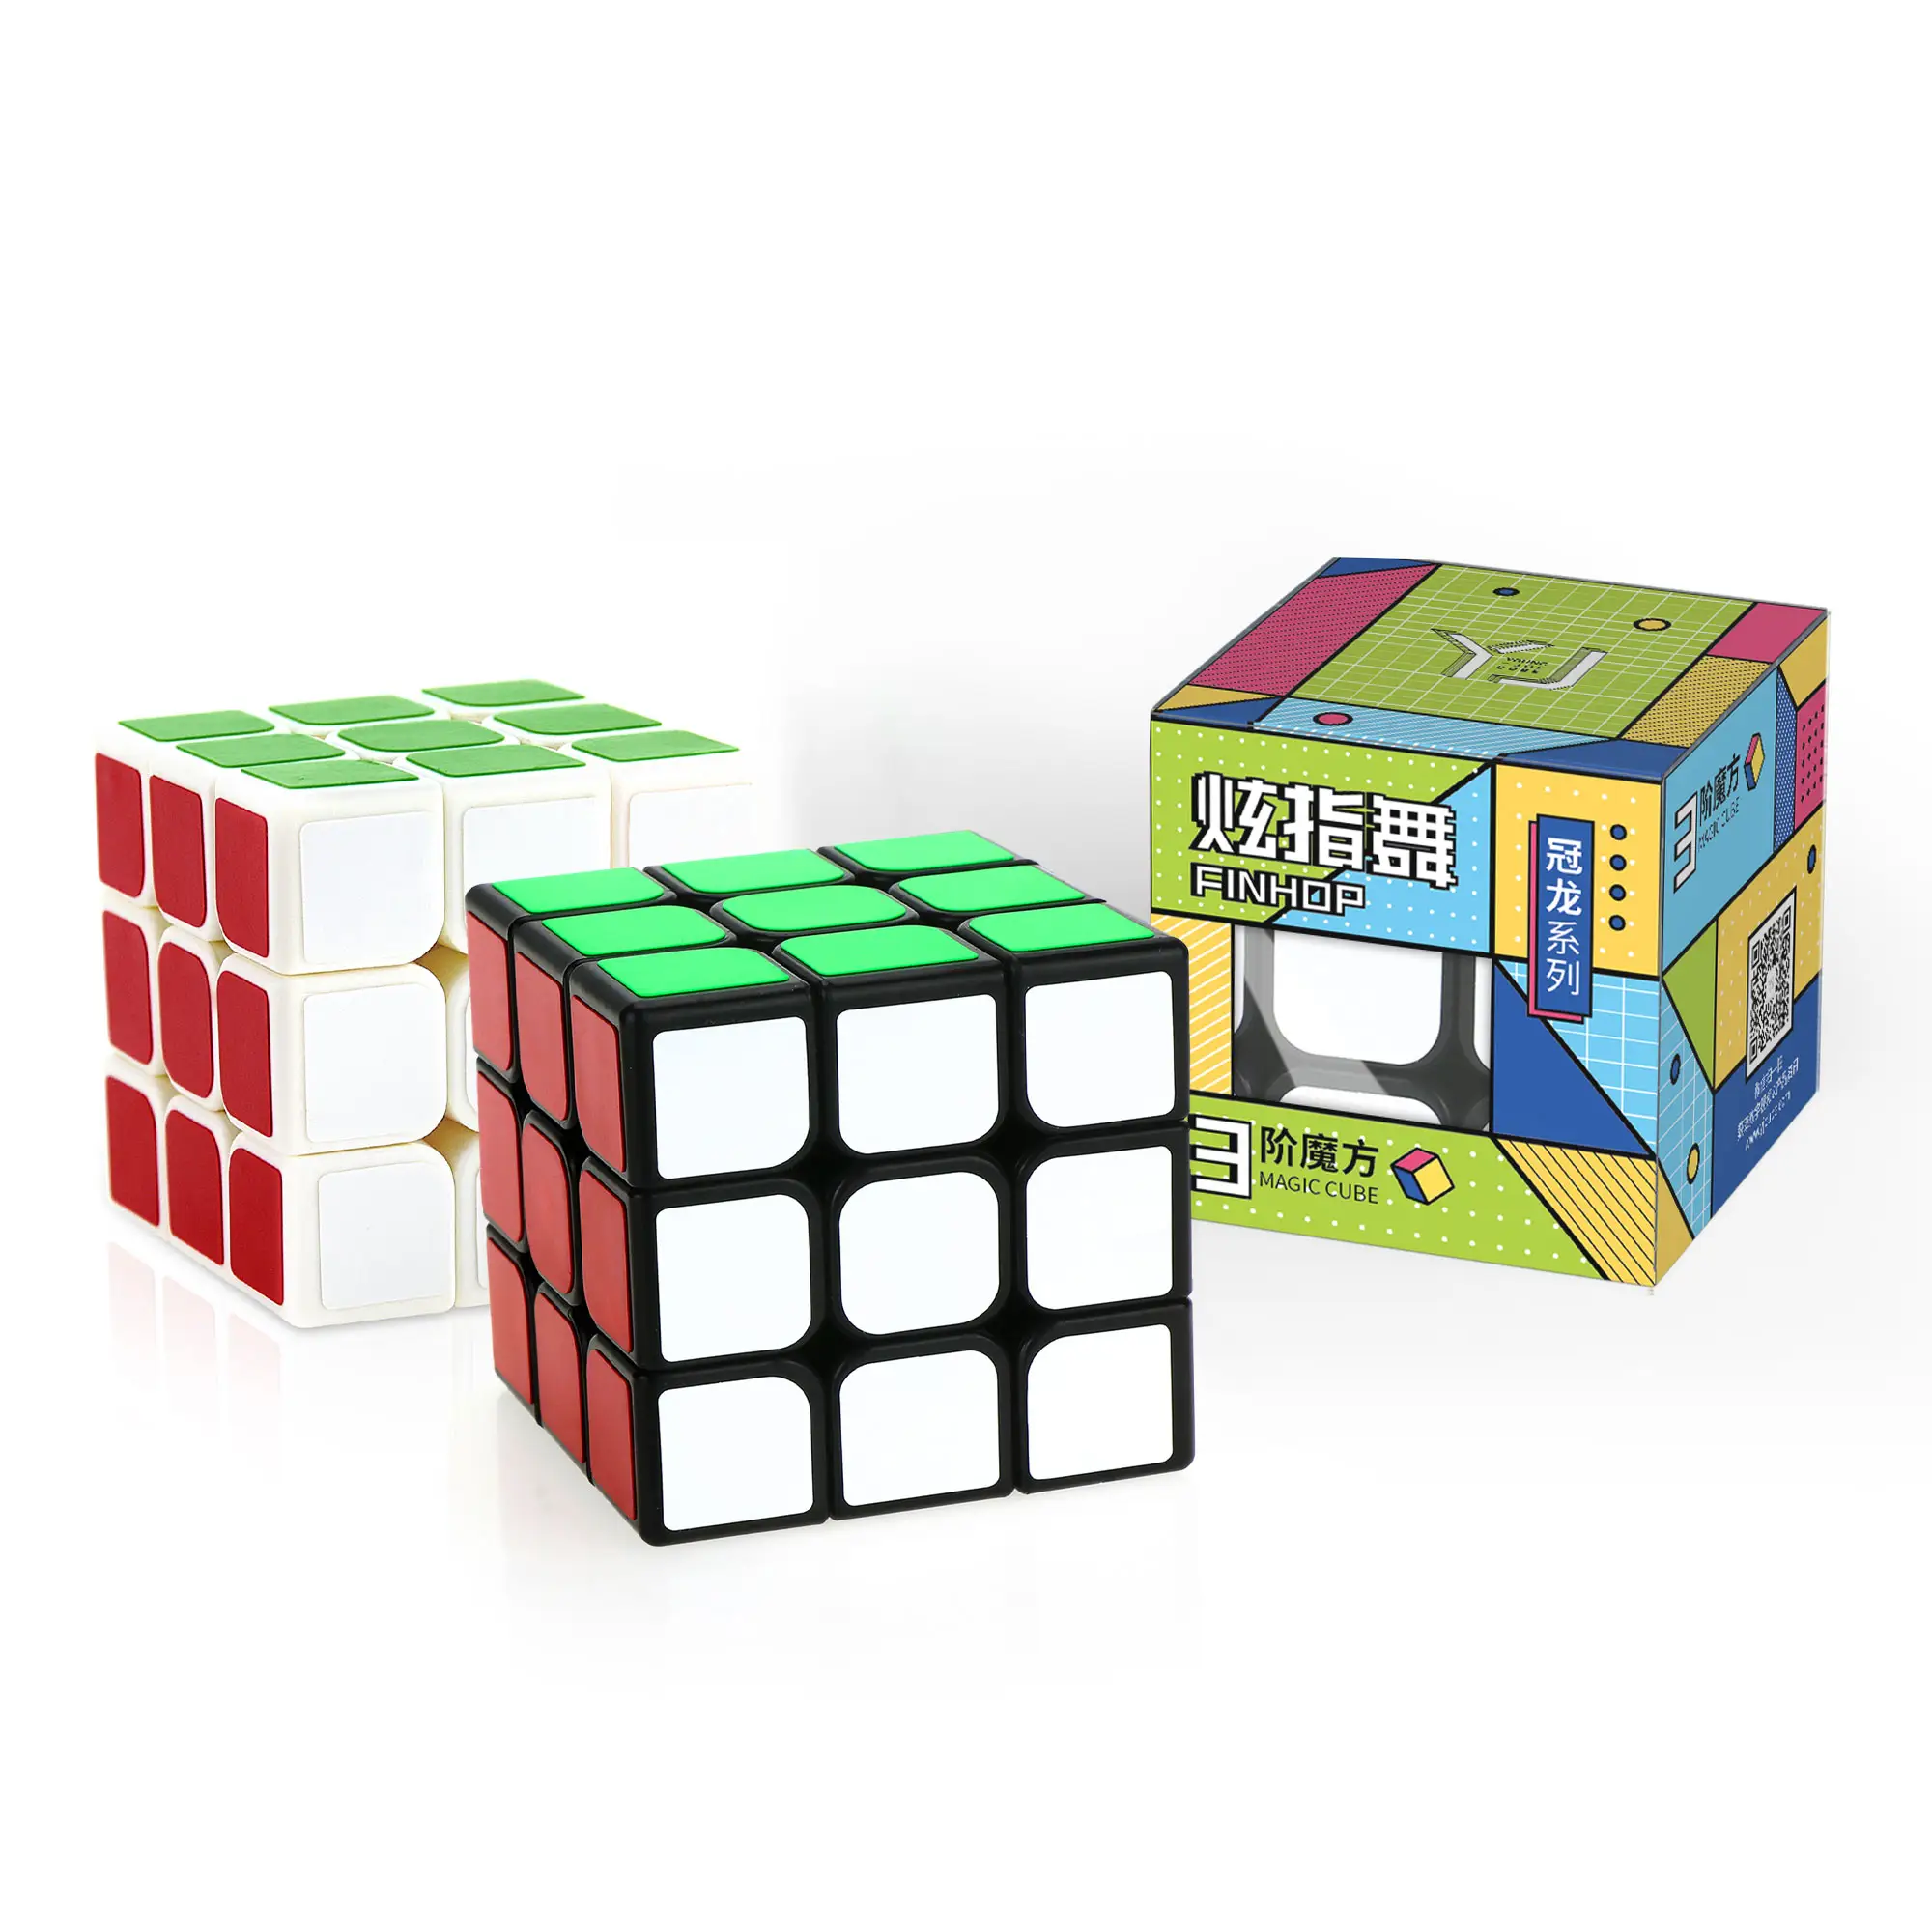 YJ Yongjun - Guanlong V3 mágico 3x3x3 Venta caliente promoción rompecabezas educativo juguete Fidget cubos 3x3